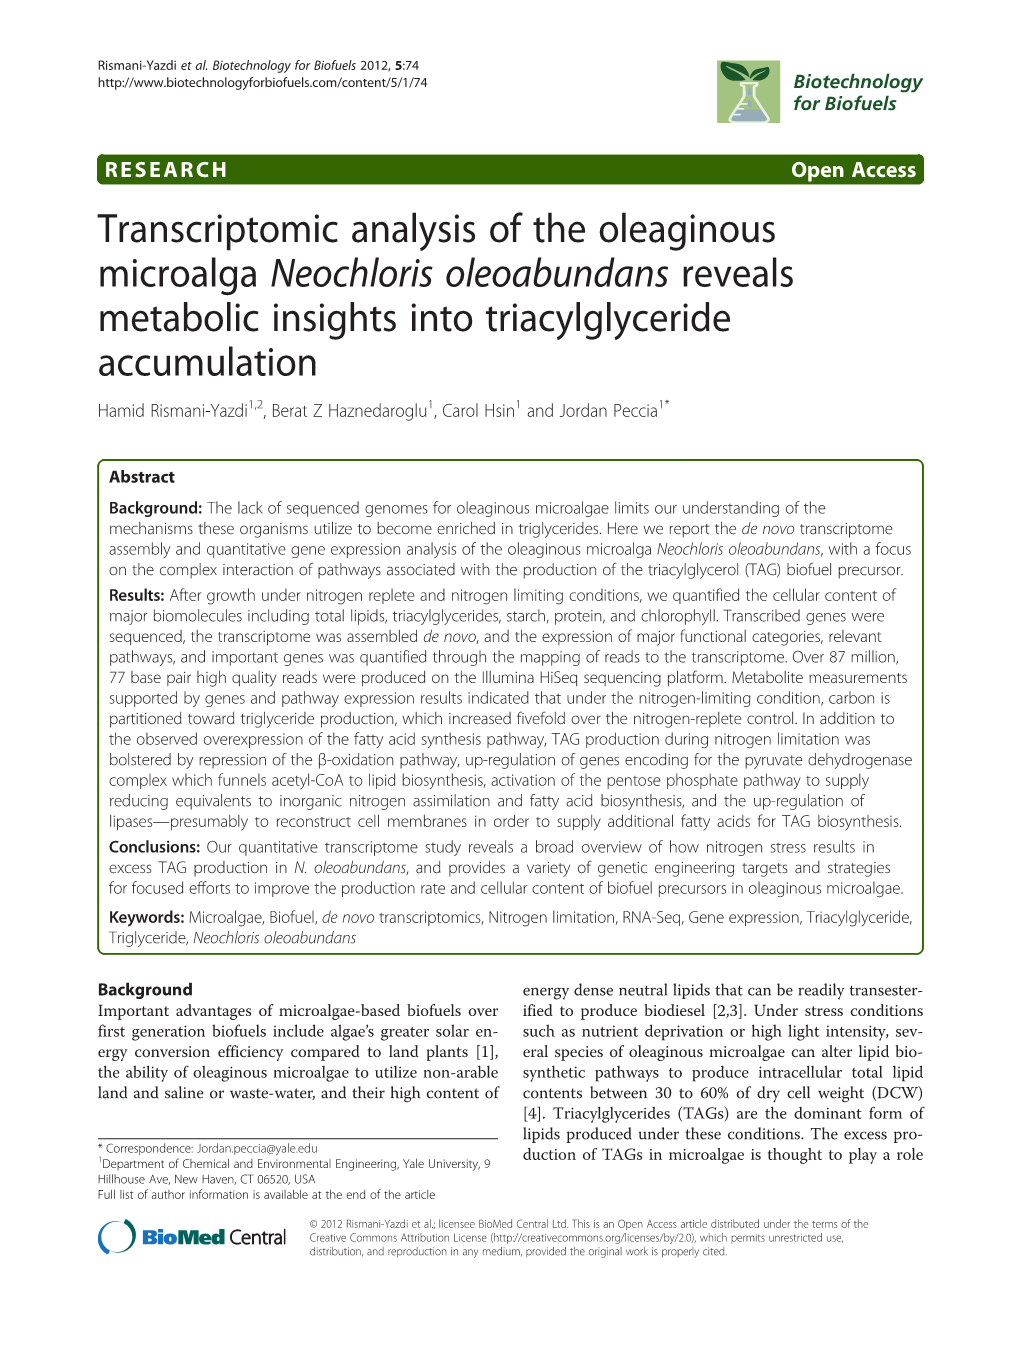 Transcriptomic Analysis of the Oleaginous Microalga Neochloris